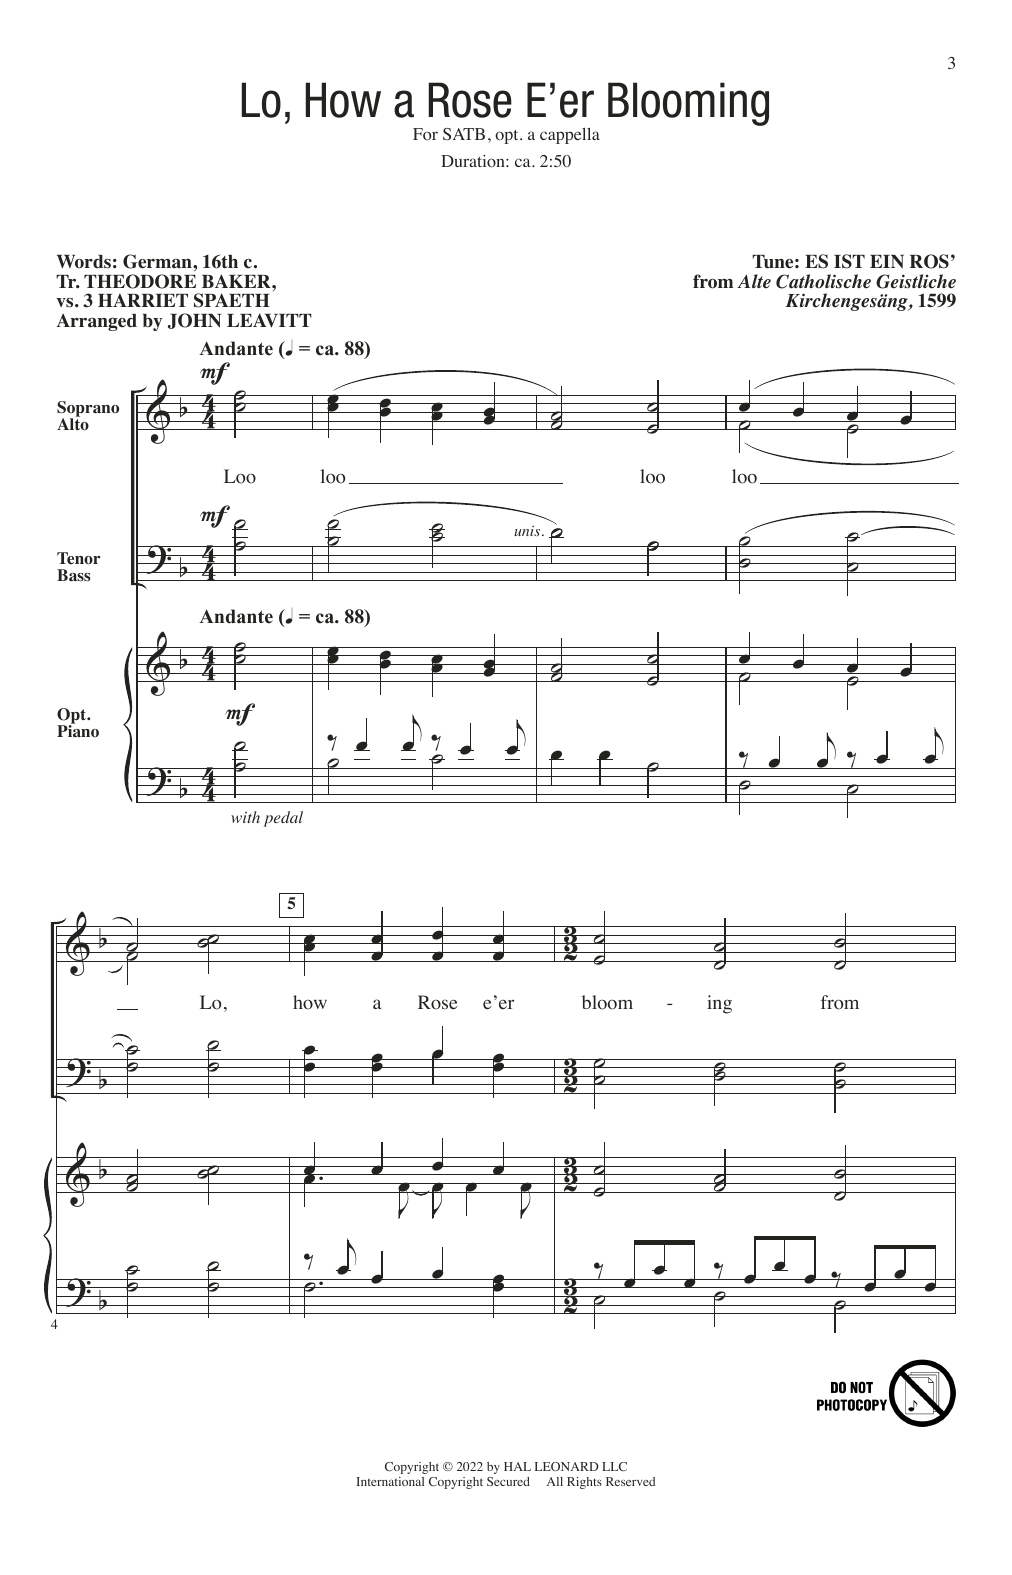 John Leavitt A Peaceful Christmas Sheet Music Notes & Chords for SATB Choir - Download or Print PDF